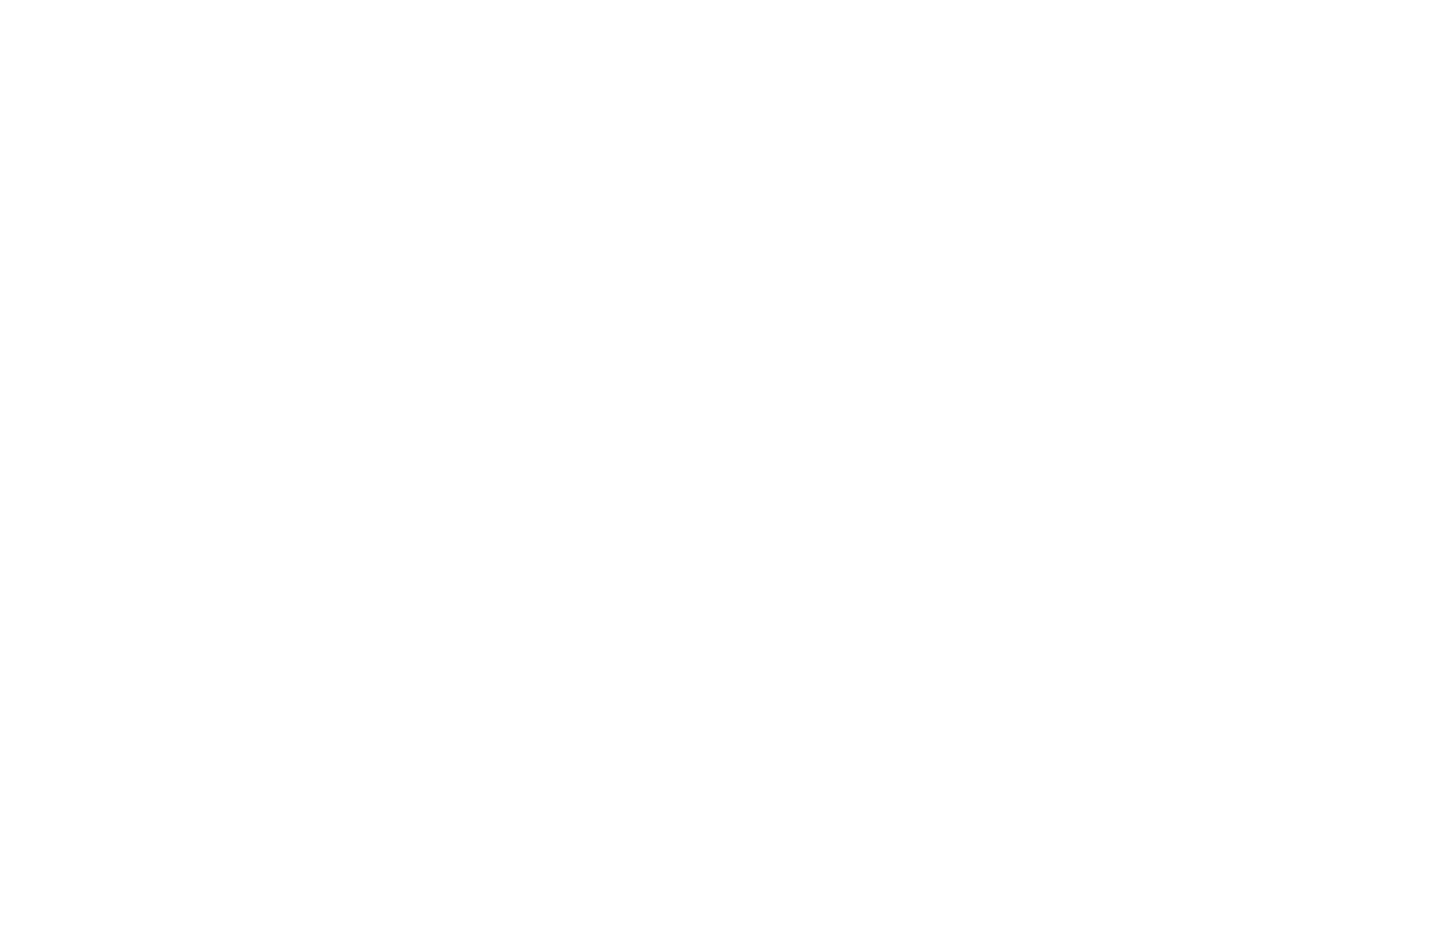 The Industry Choice Award logo